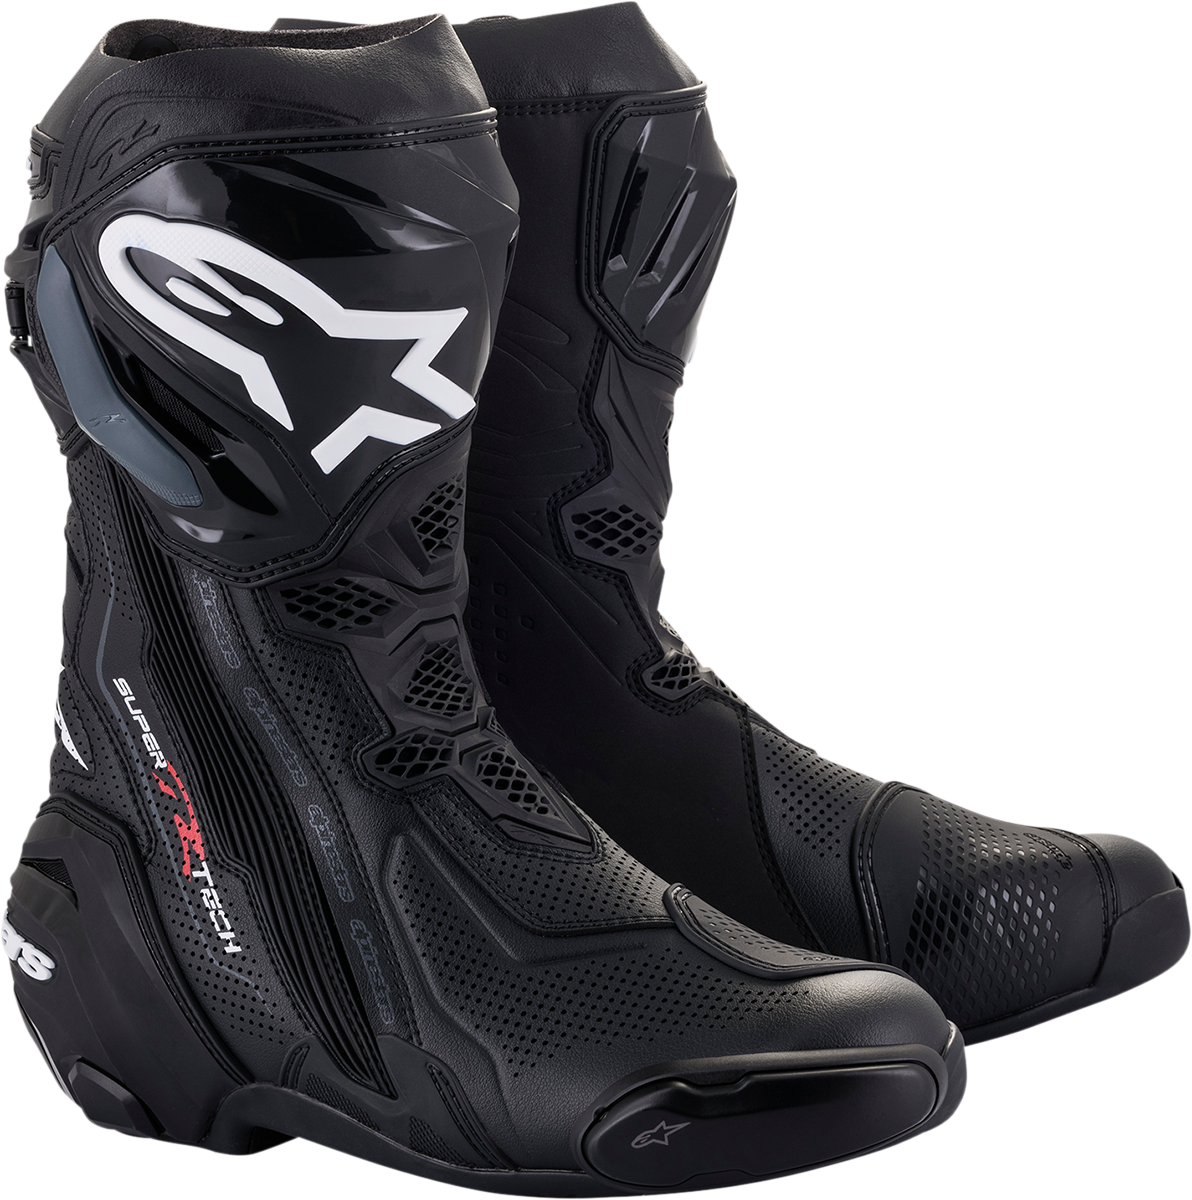 ALPINESTARS Supertech V Boots - Black - US 9.5 / EU 44 2220121-10-44